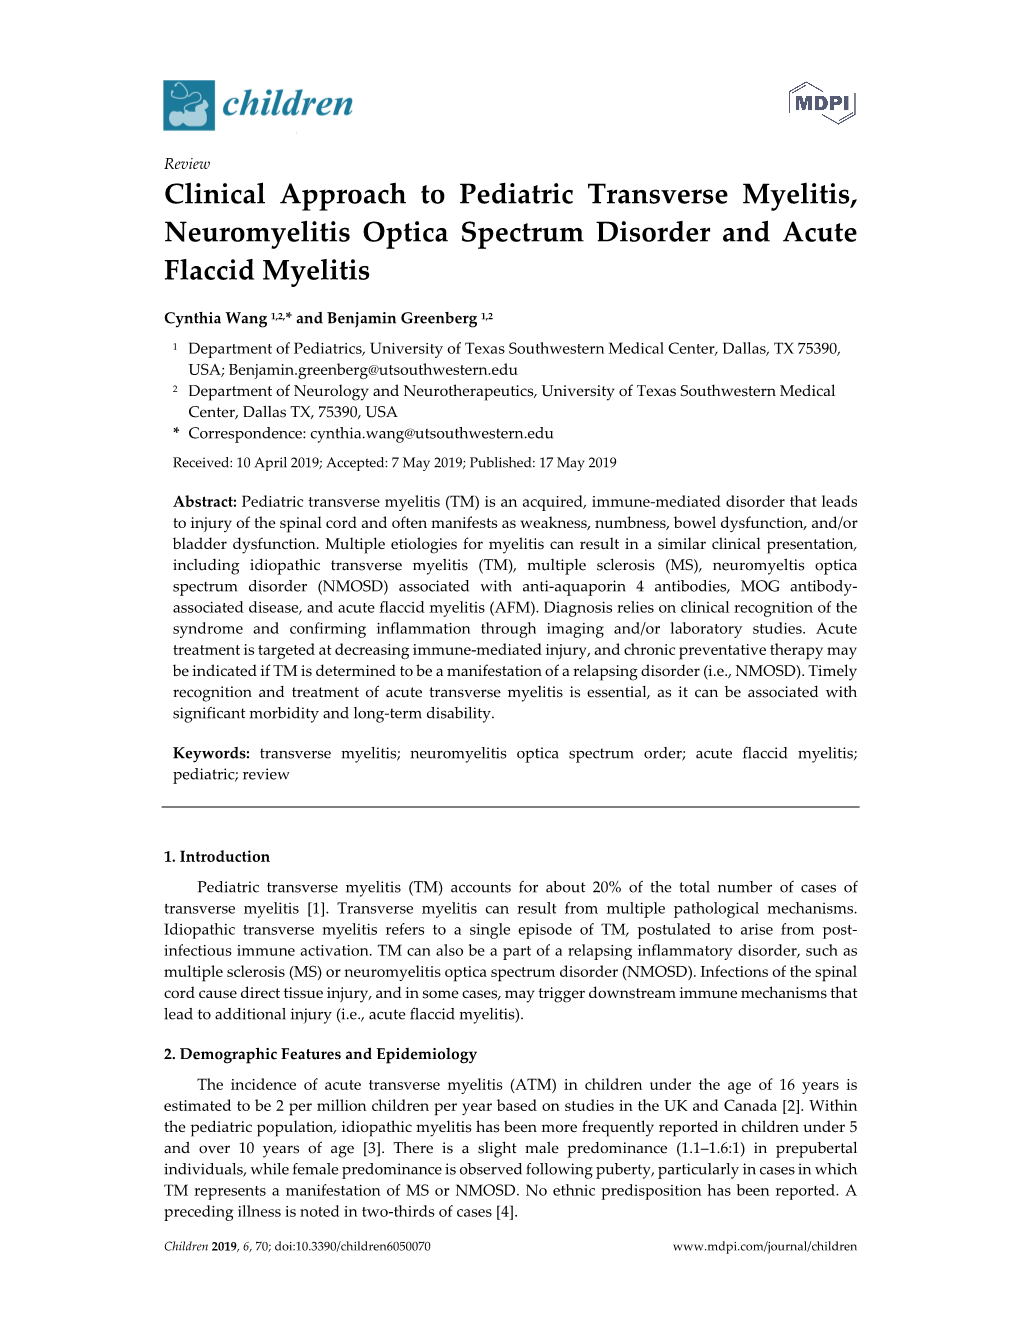 Clinical Approach to Pediatric Transverse Myelitis, Neuromyelitis Optica Spectrum Disorder and Acute Flaccid Myelitis